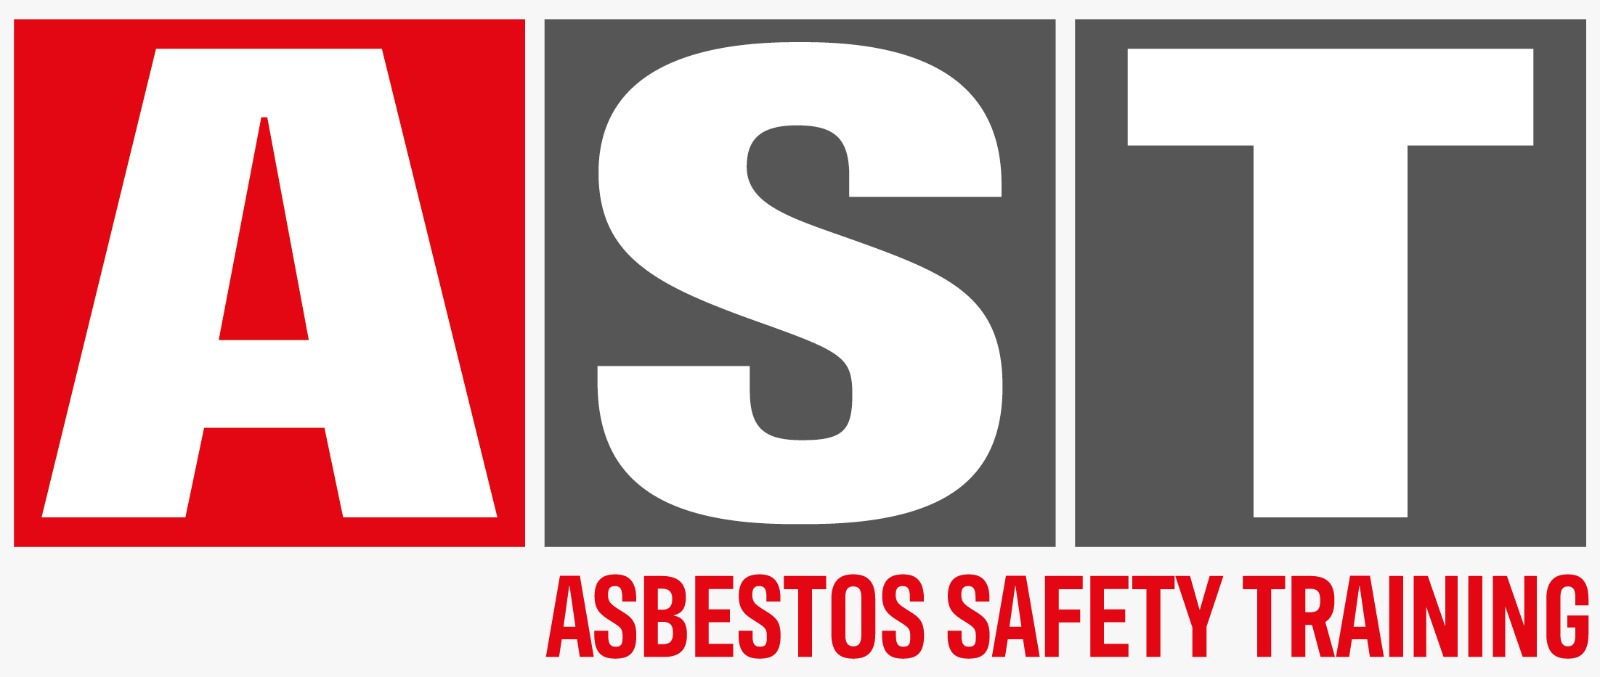 Asbestos Safety Training LTD